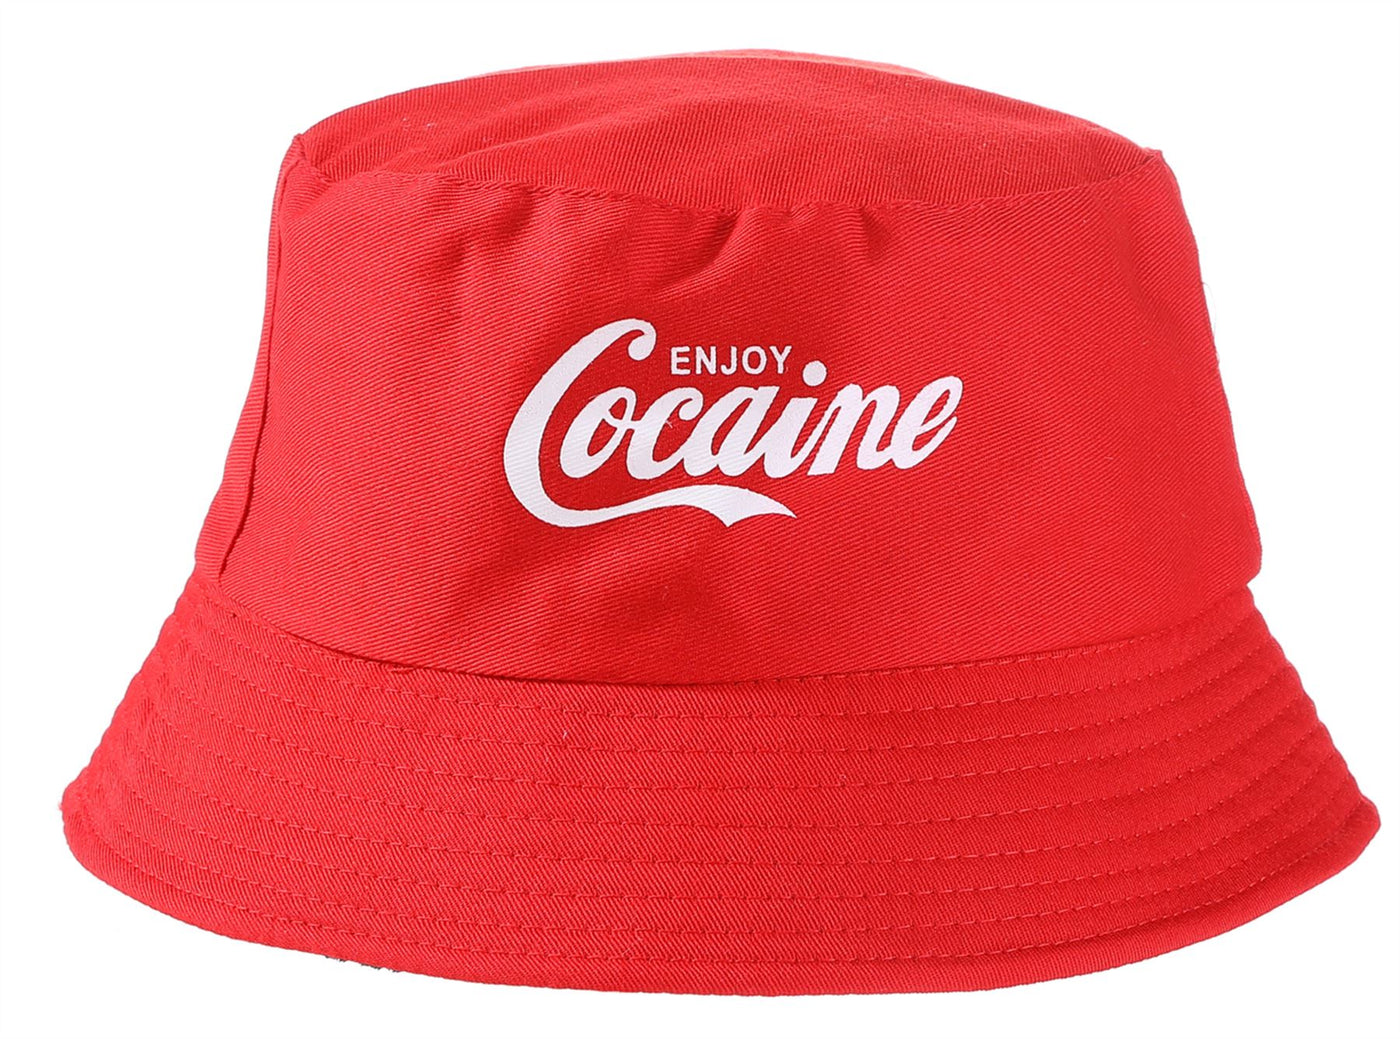 Unisex Enjoy Cocaine Bucket Hat Funny Summer Festival Sun Holiday Joke Novelty